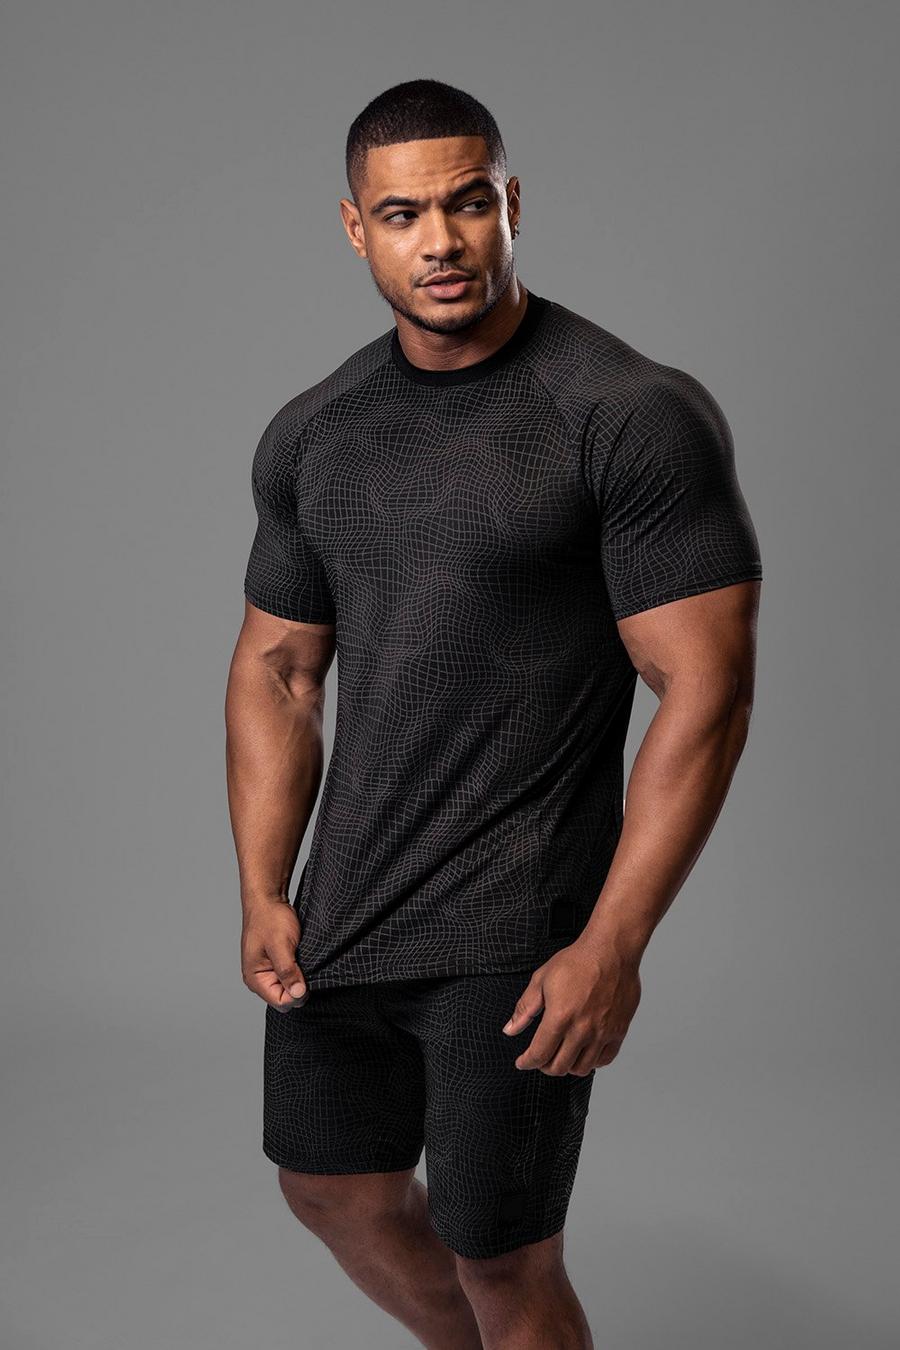 T-shirt Man Active Gym riflettente con stampa a griglia, Black